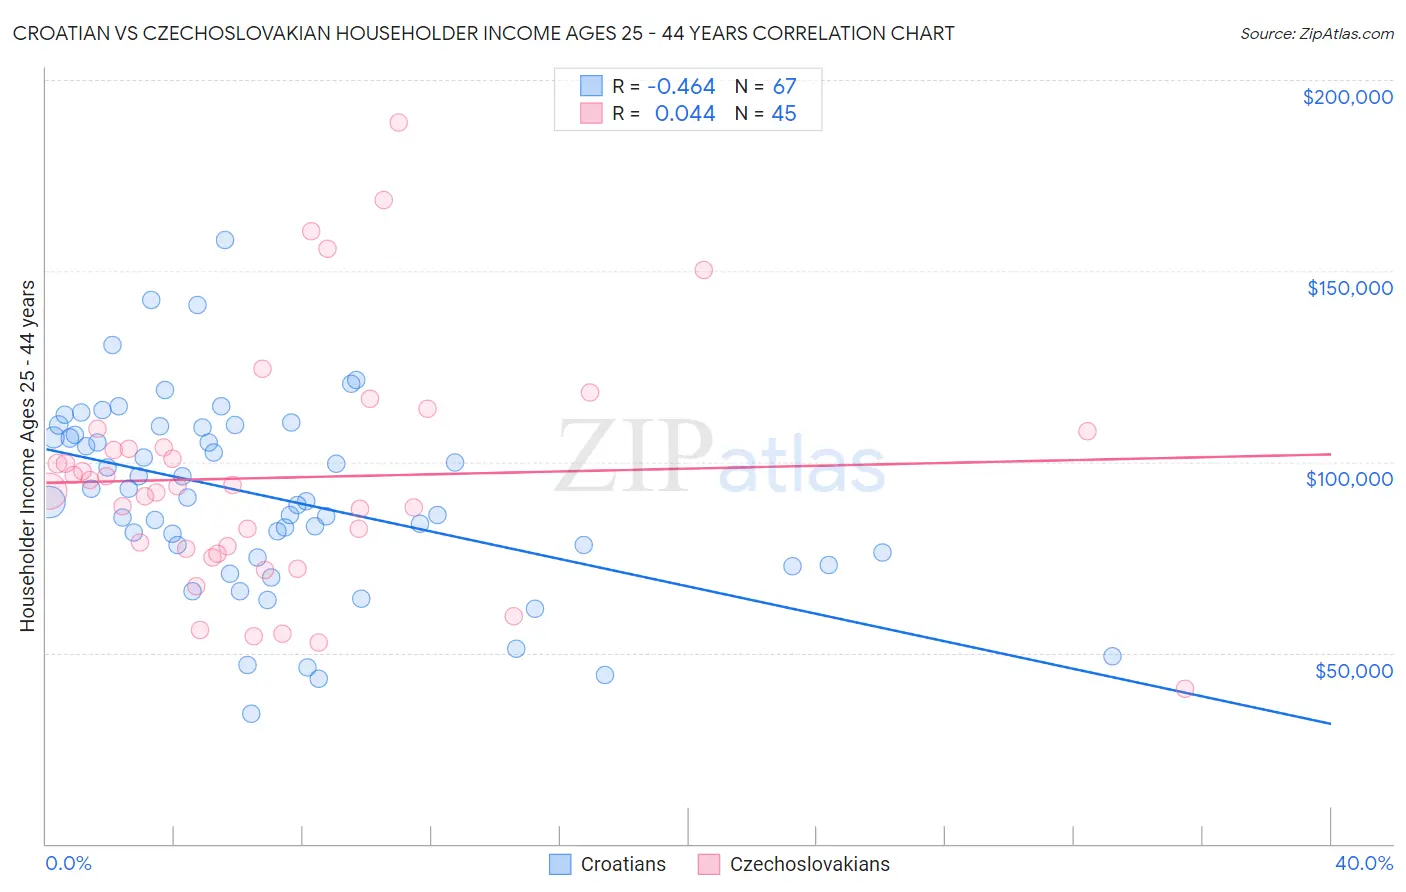 Croatian vs Czechoslovakian Householder Income Ages 25 - 44 years